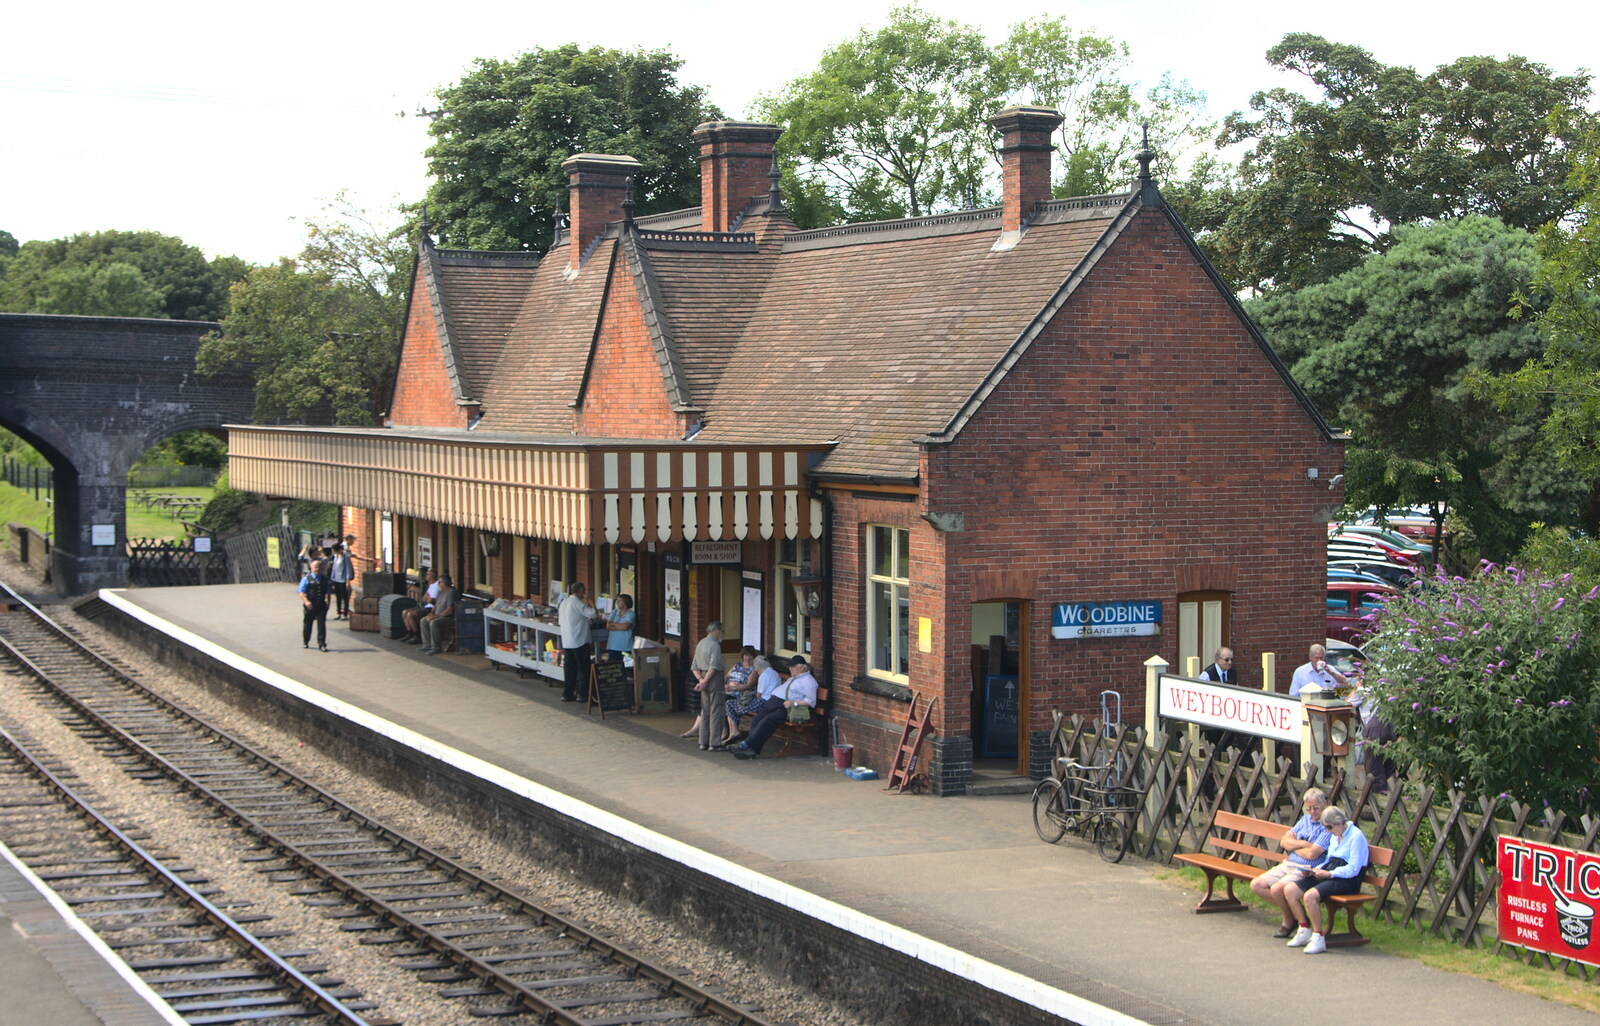 Weybourne station from Sheringham Steam, Sheringham, North Norfolk - 31st July 2016